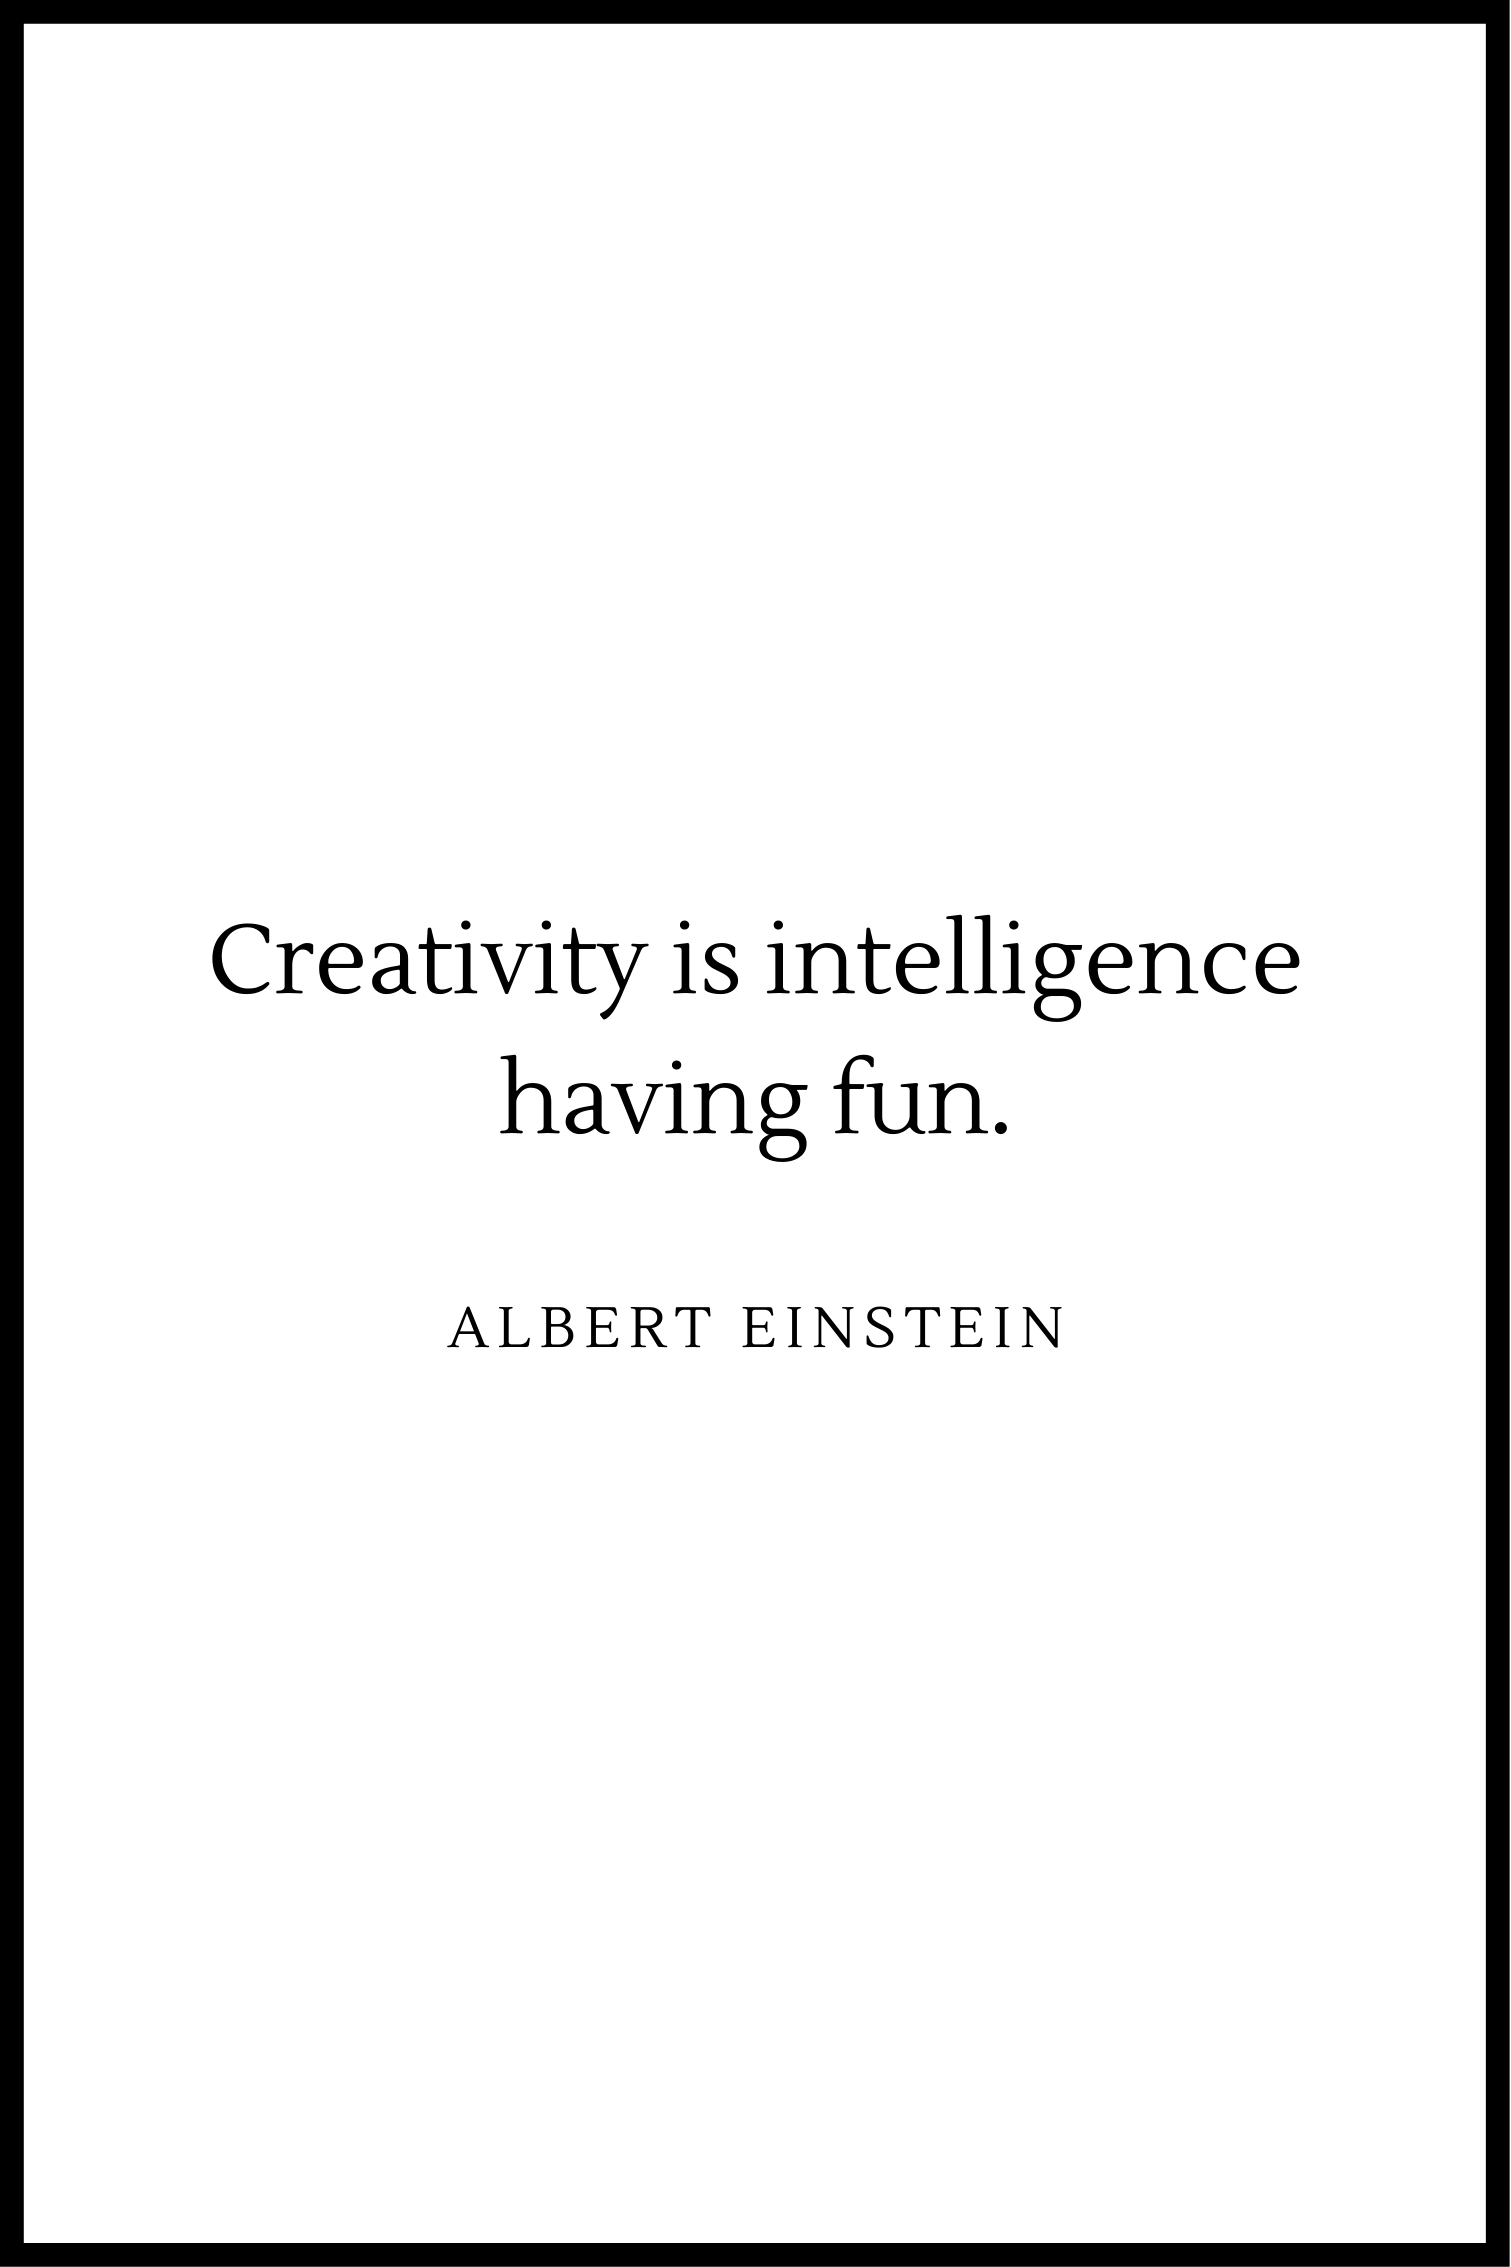 kreativitet är intelligens affisch